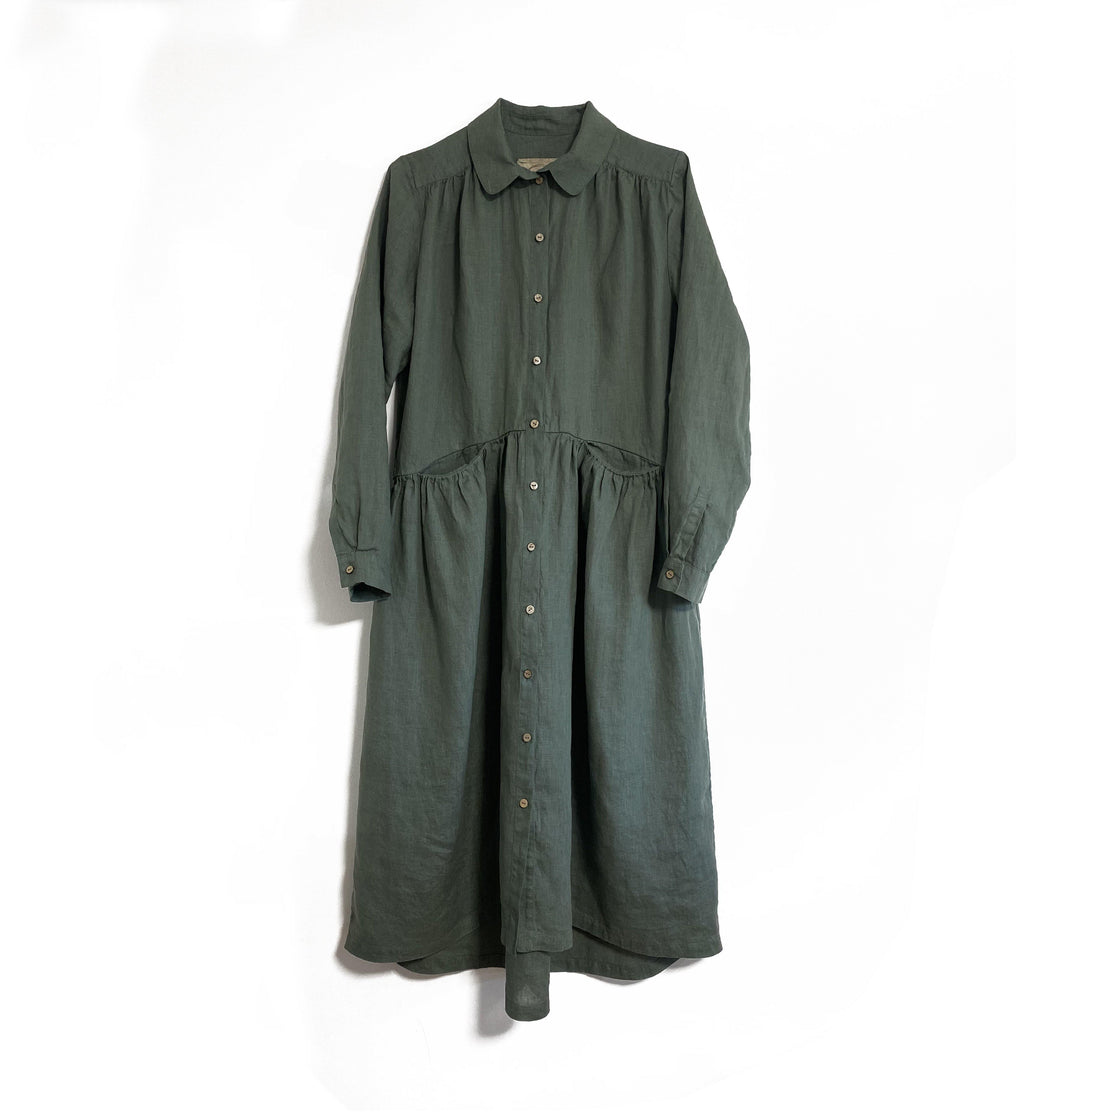 Green Linen Dress with collar and buttons - Manufacture de Lin